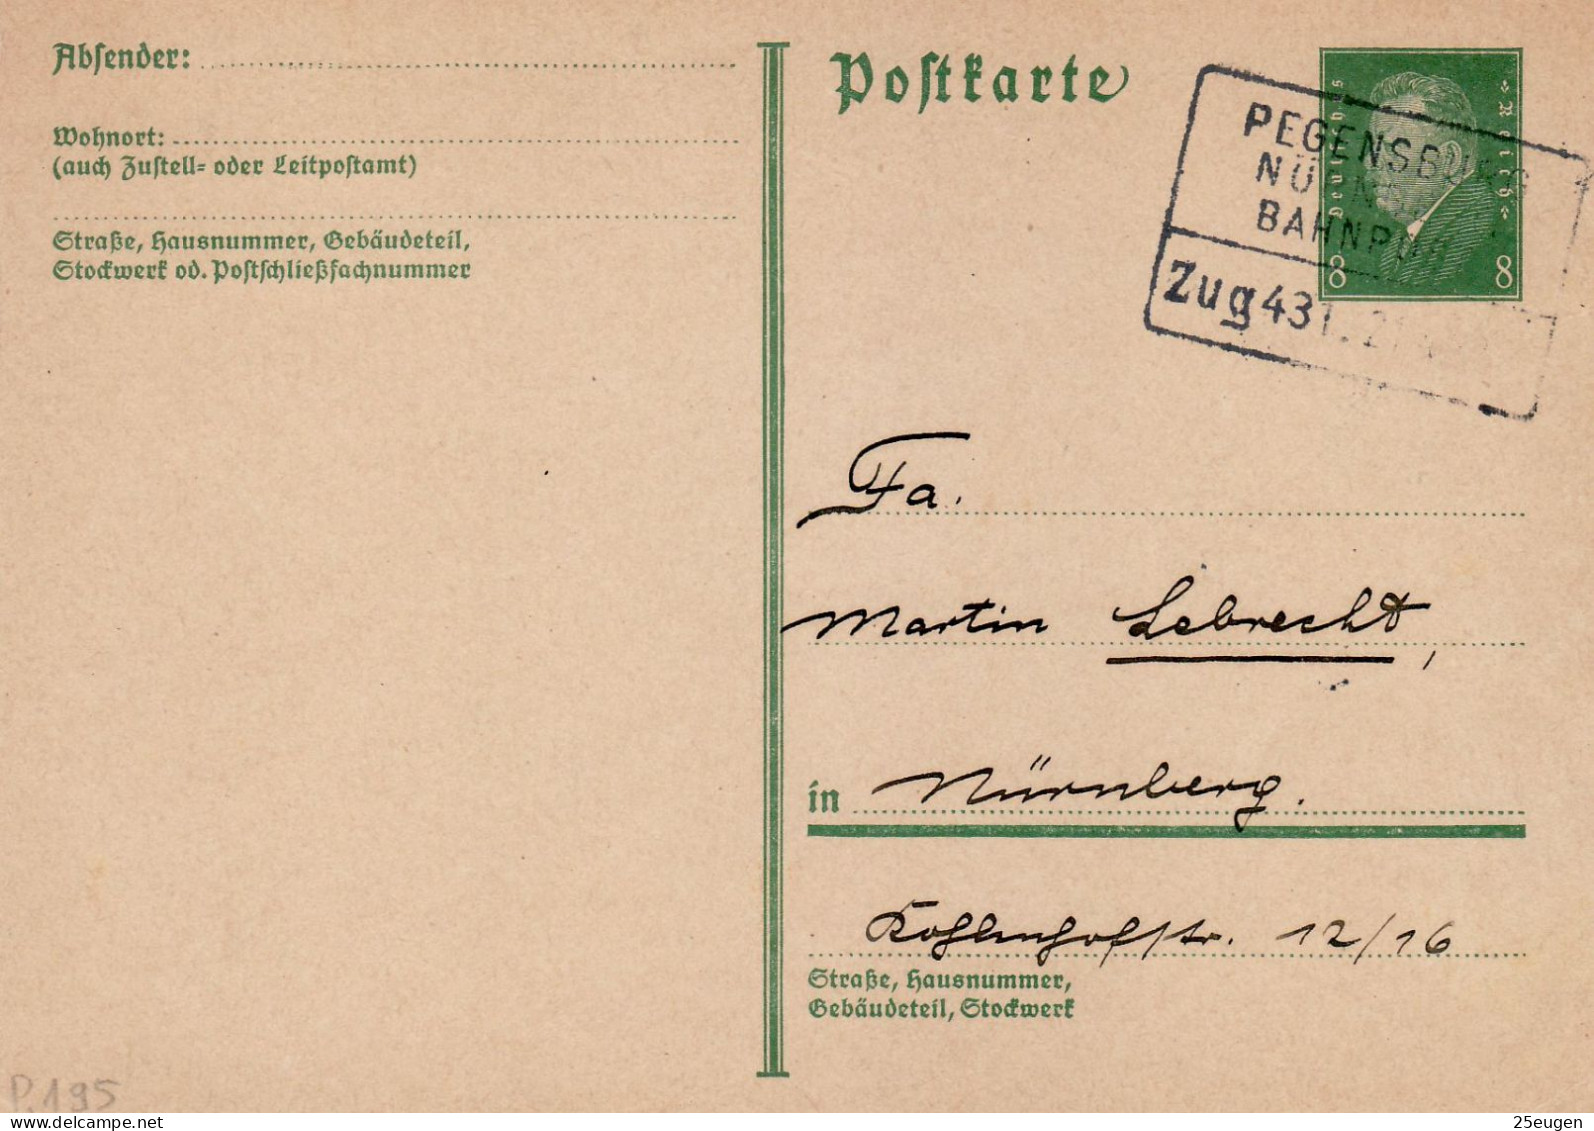 GERMANY WEIMAR REPUBLIC 1931 POSTCARD  MiNr P 195 I  SENT TO NUERNBERG /BAHNPOST/ - Cartes Postales